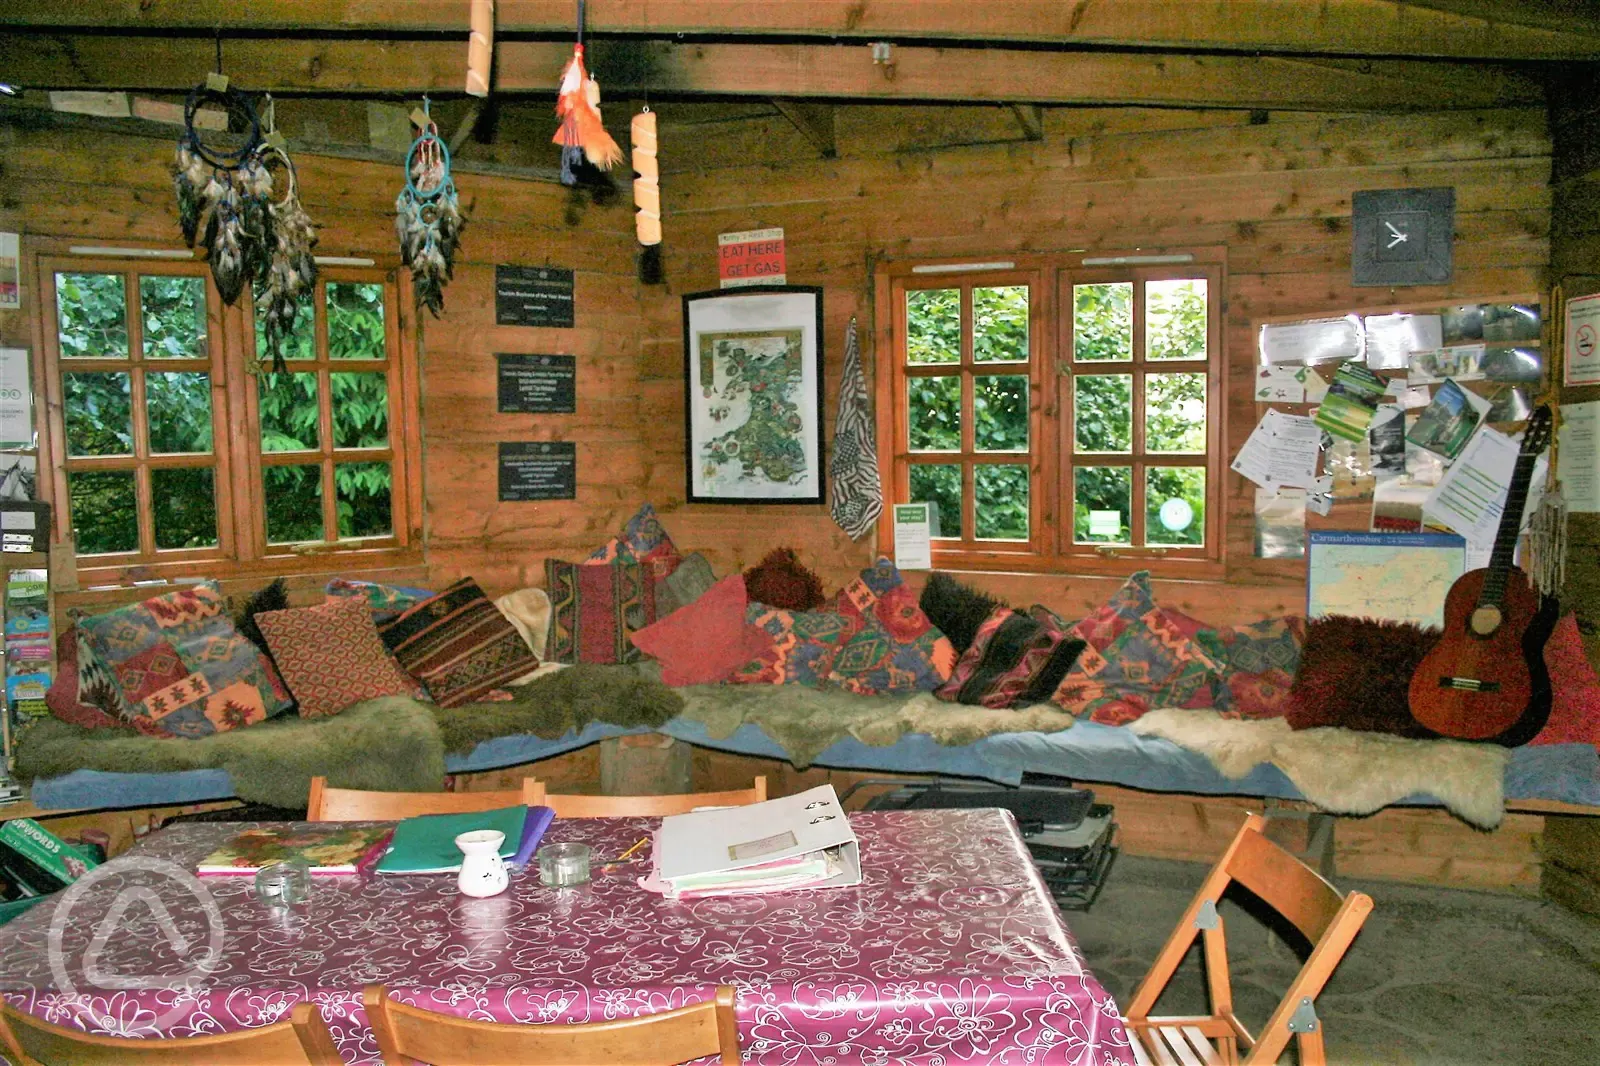 Inside the Communal Log Cabin